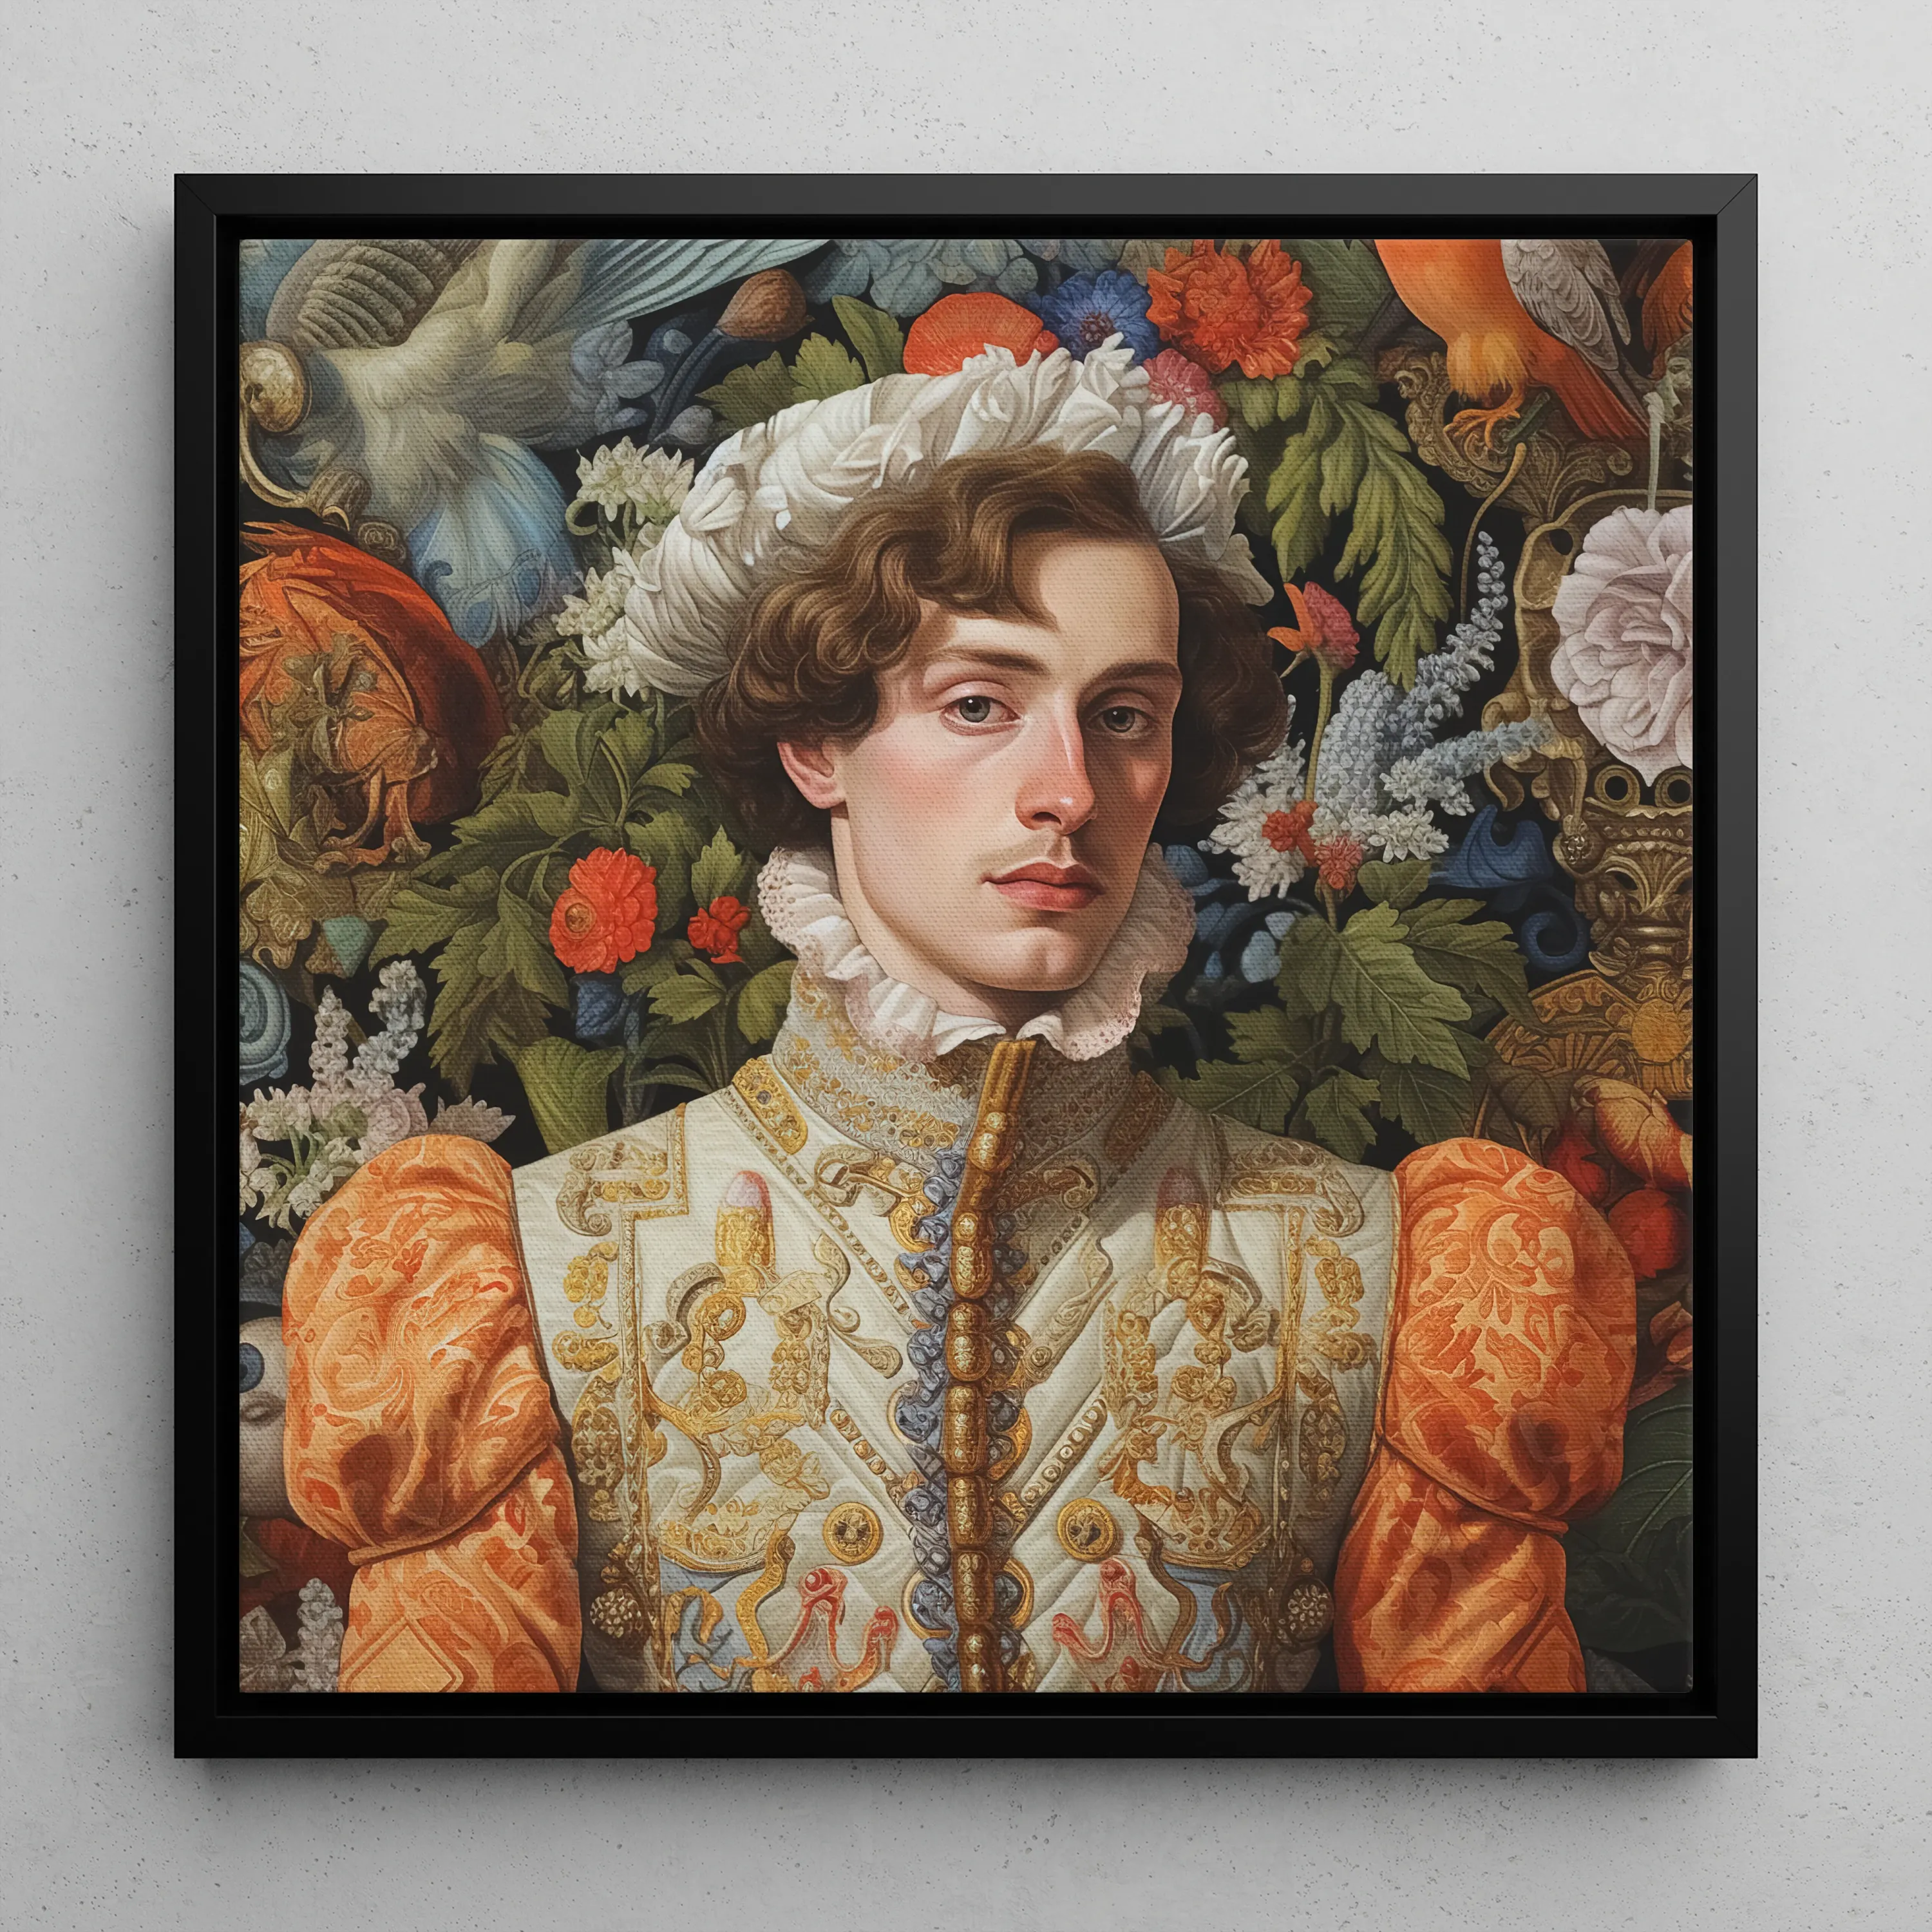 Prince Hugo - Gay German Royalty Renaissance Queerart Canvas - 16’x16’ - Posters Prints & Visual Artwork - Aesthetic Art